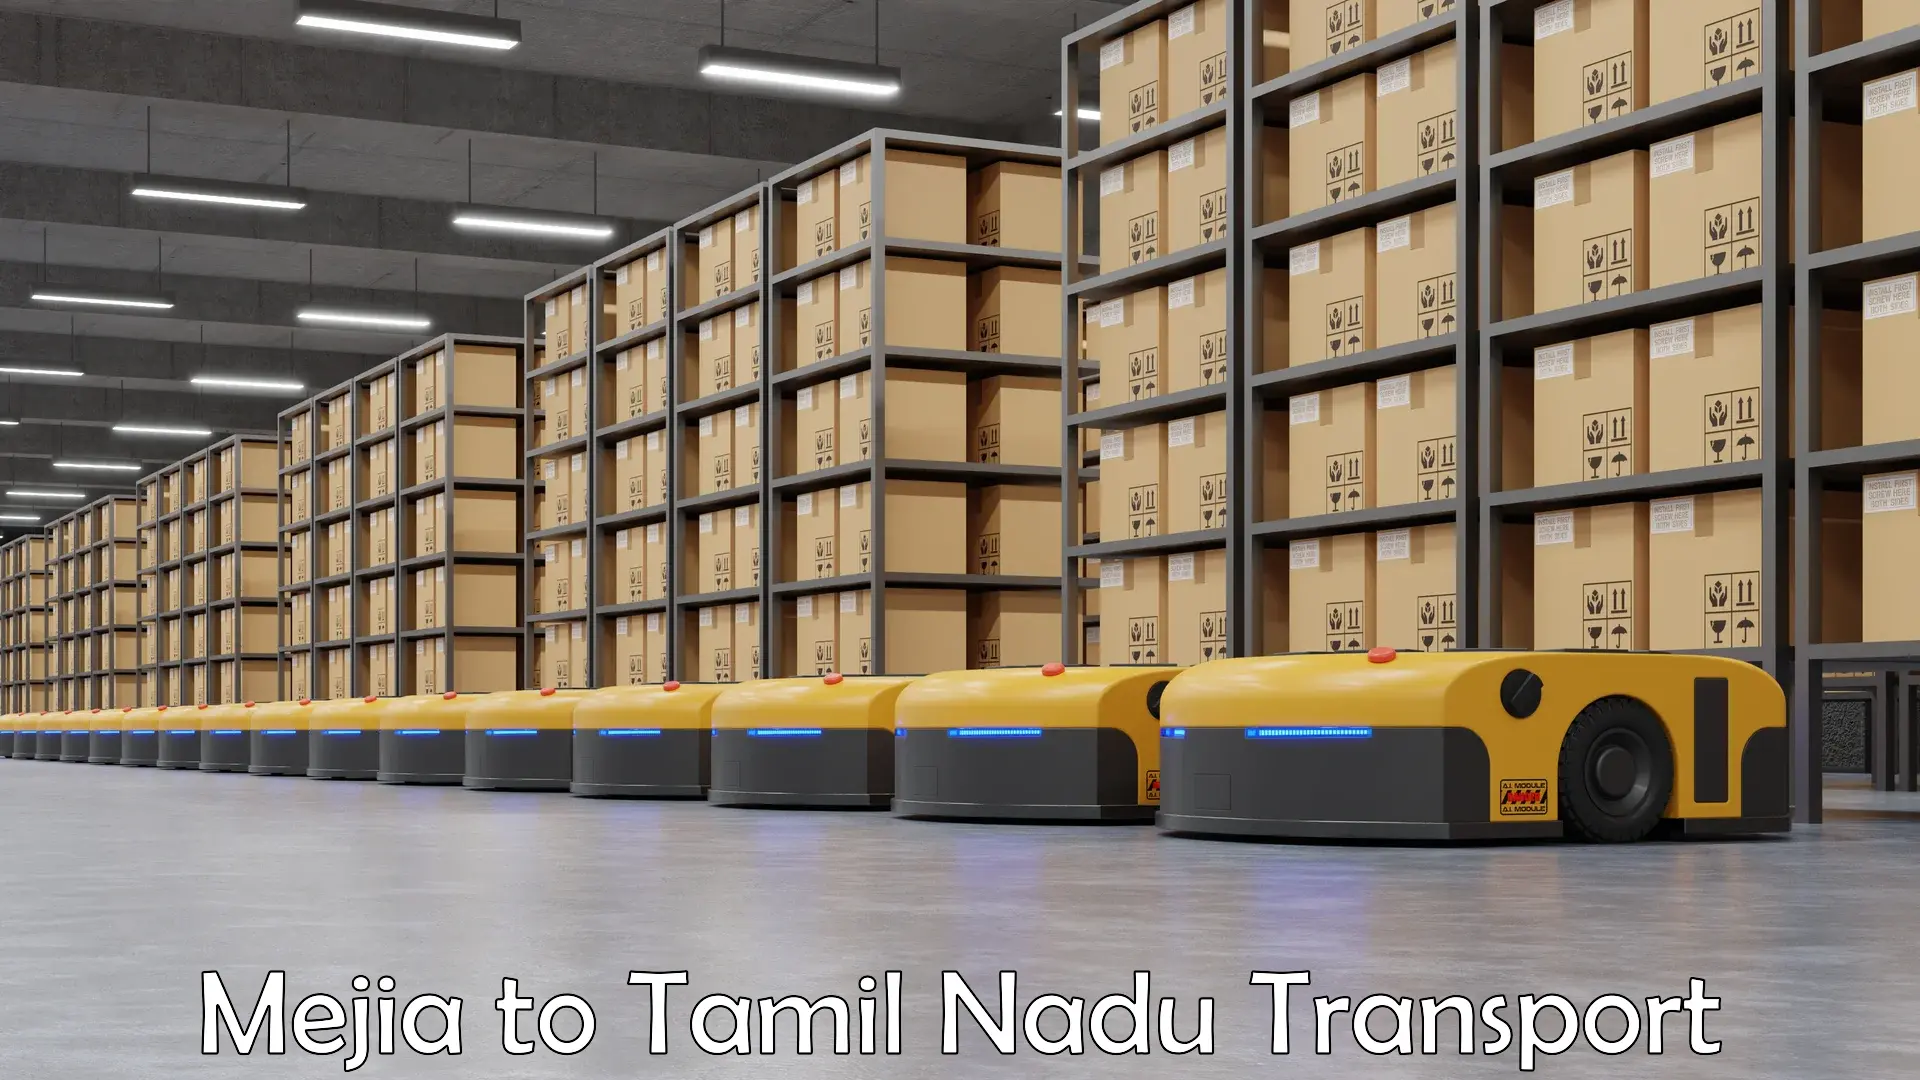 Daily transport service Mejia to Tamil Nadu